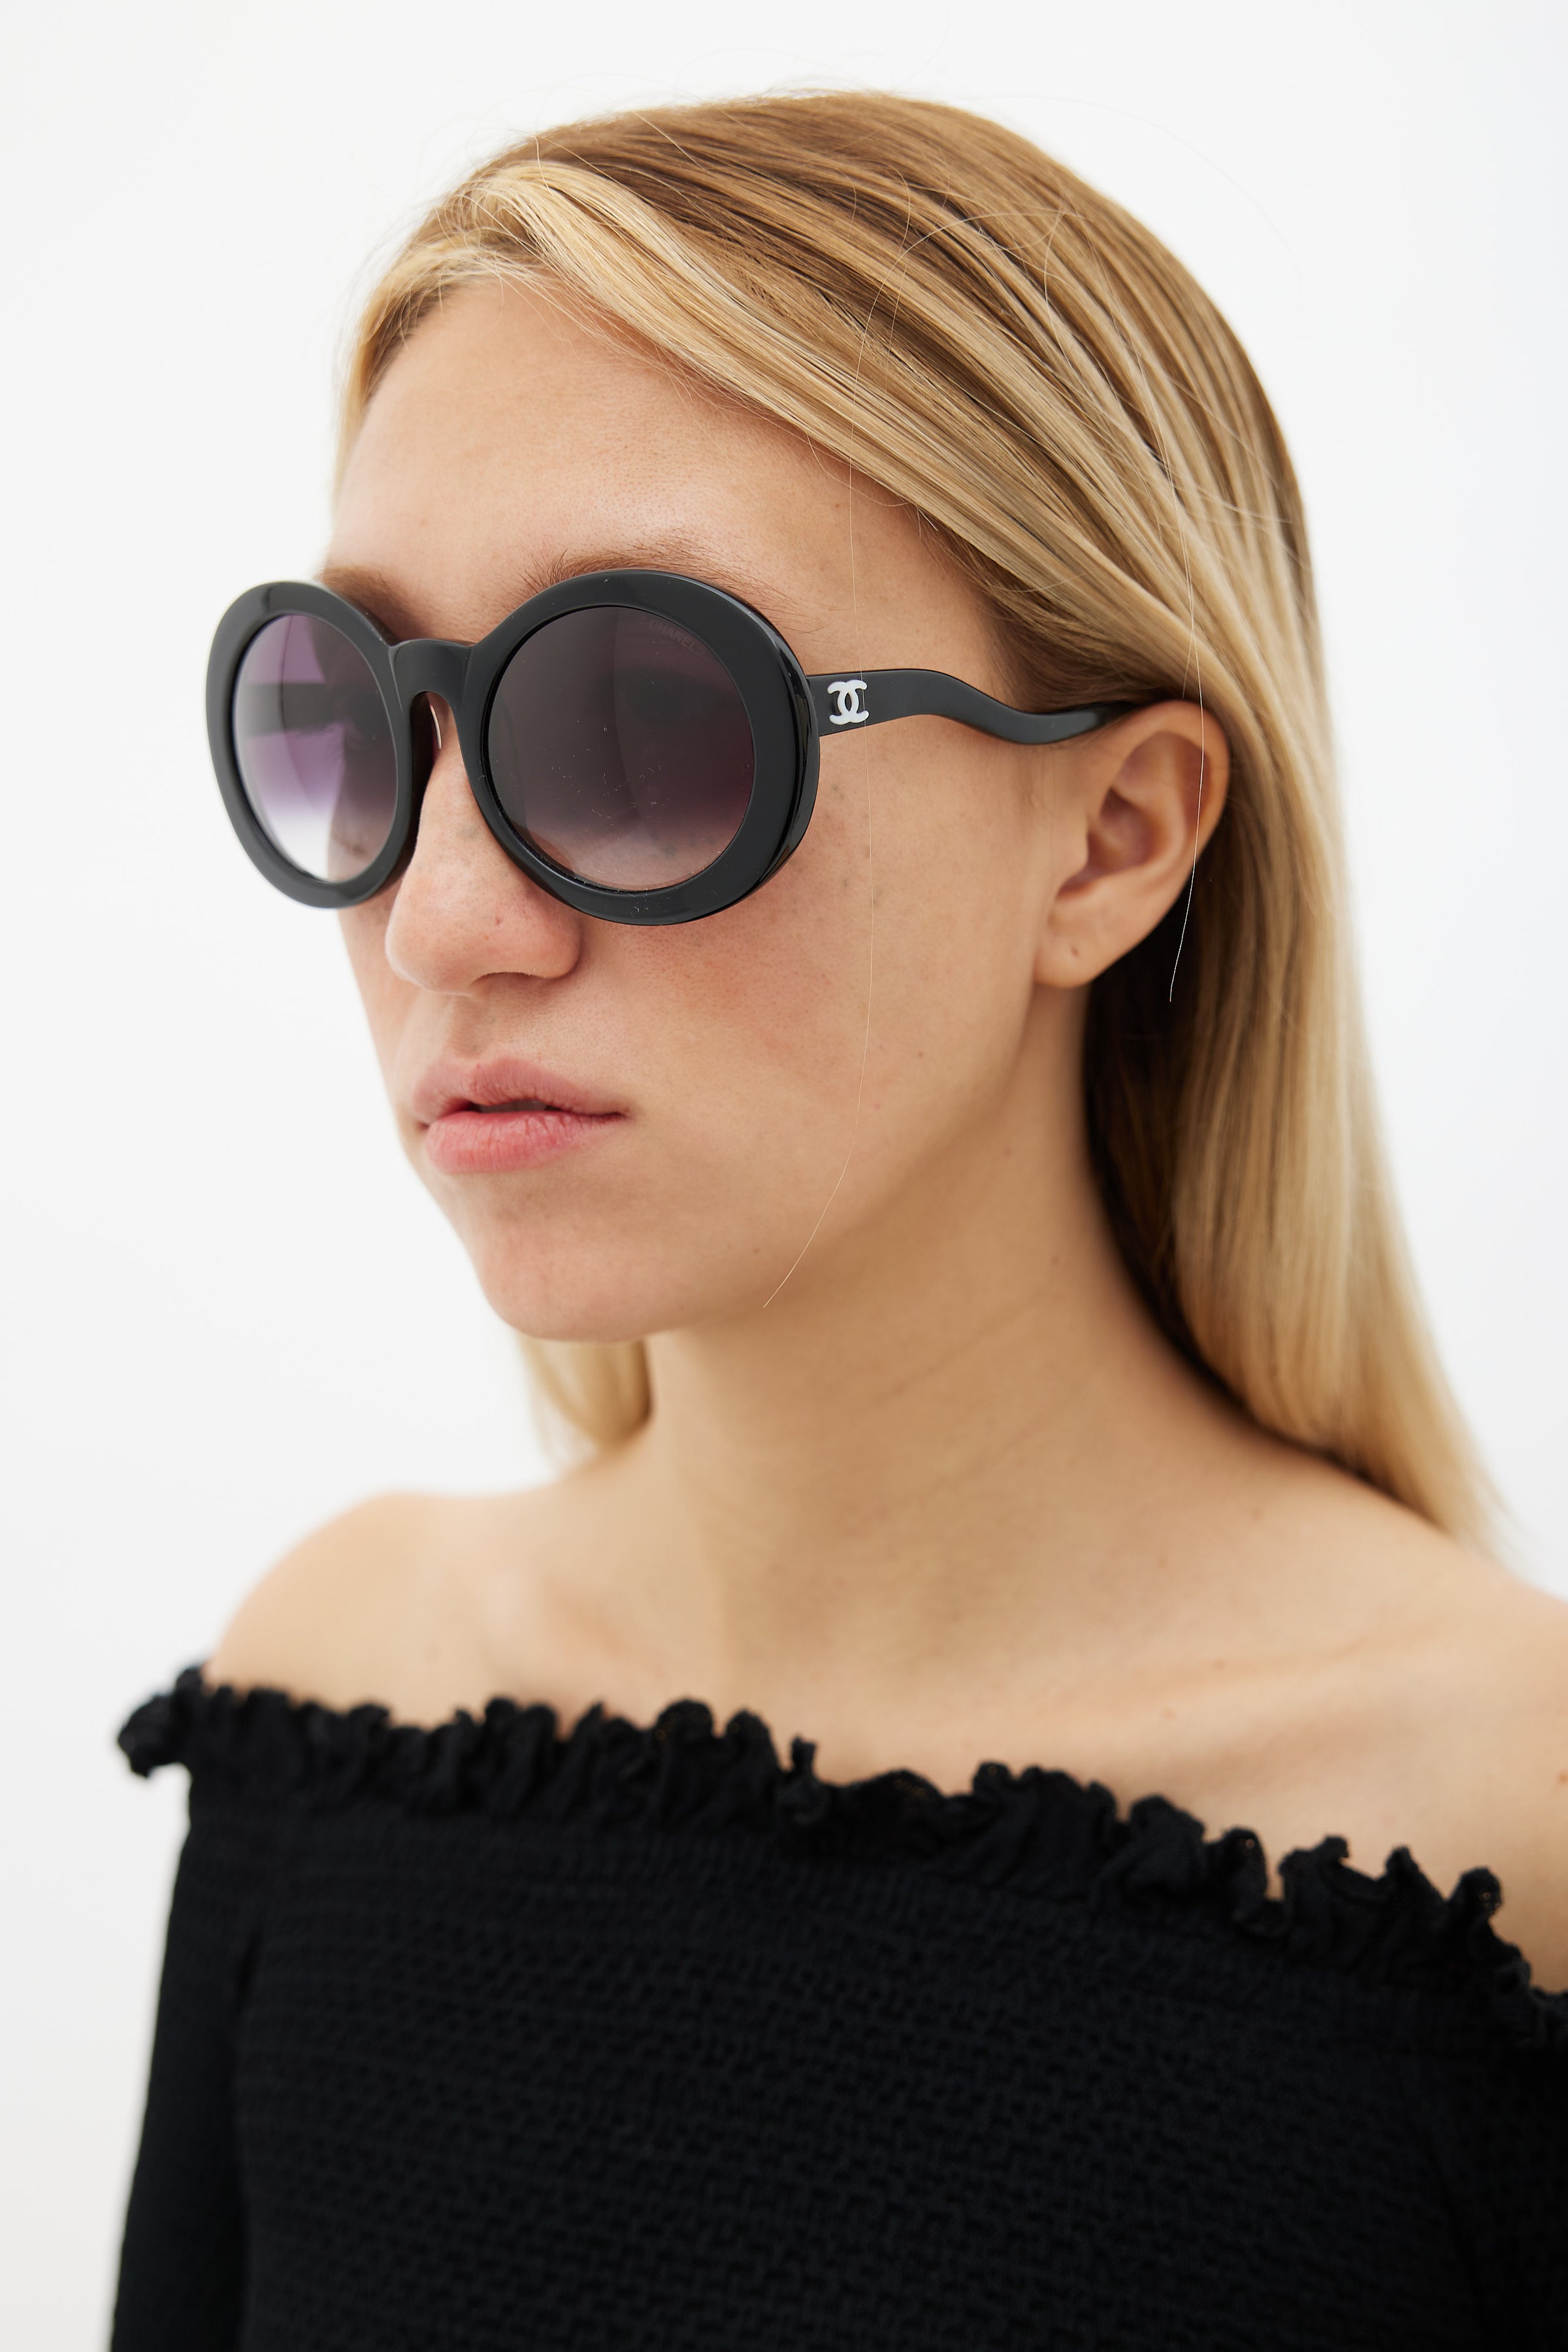 chanel sunglasses gradient new